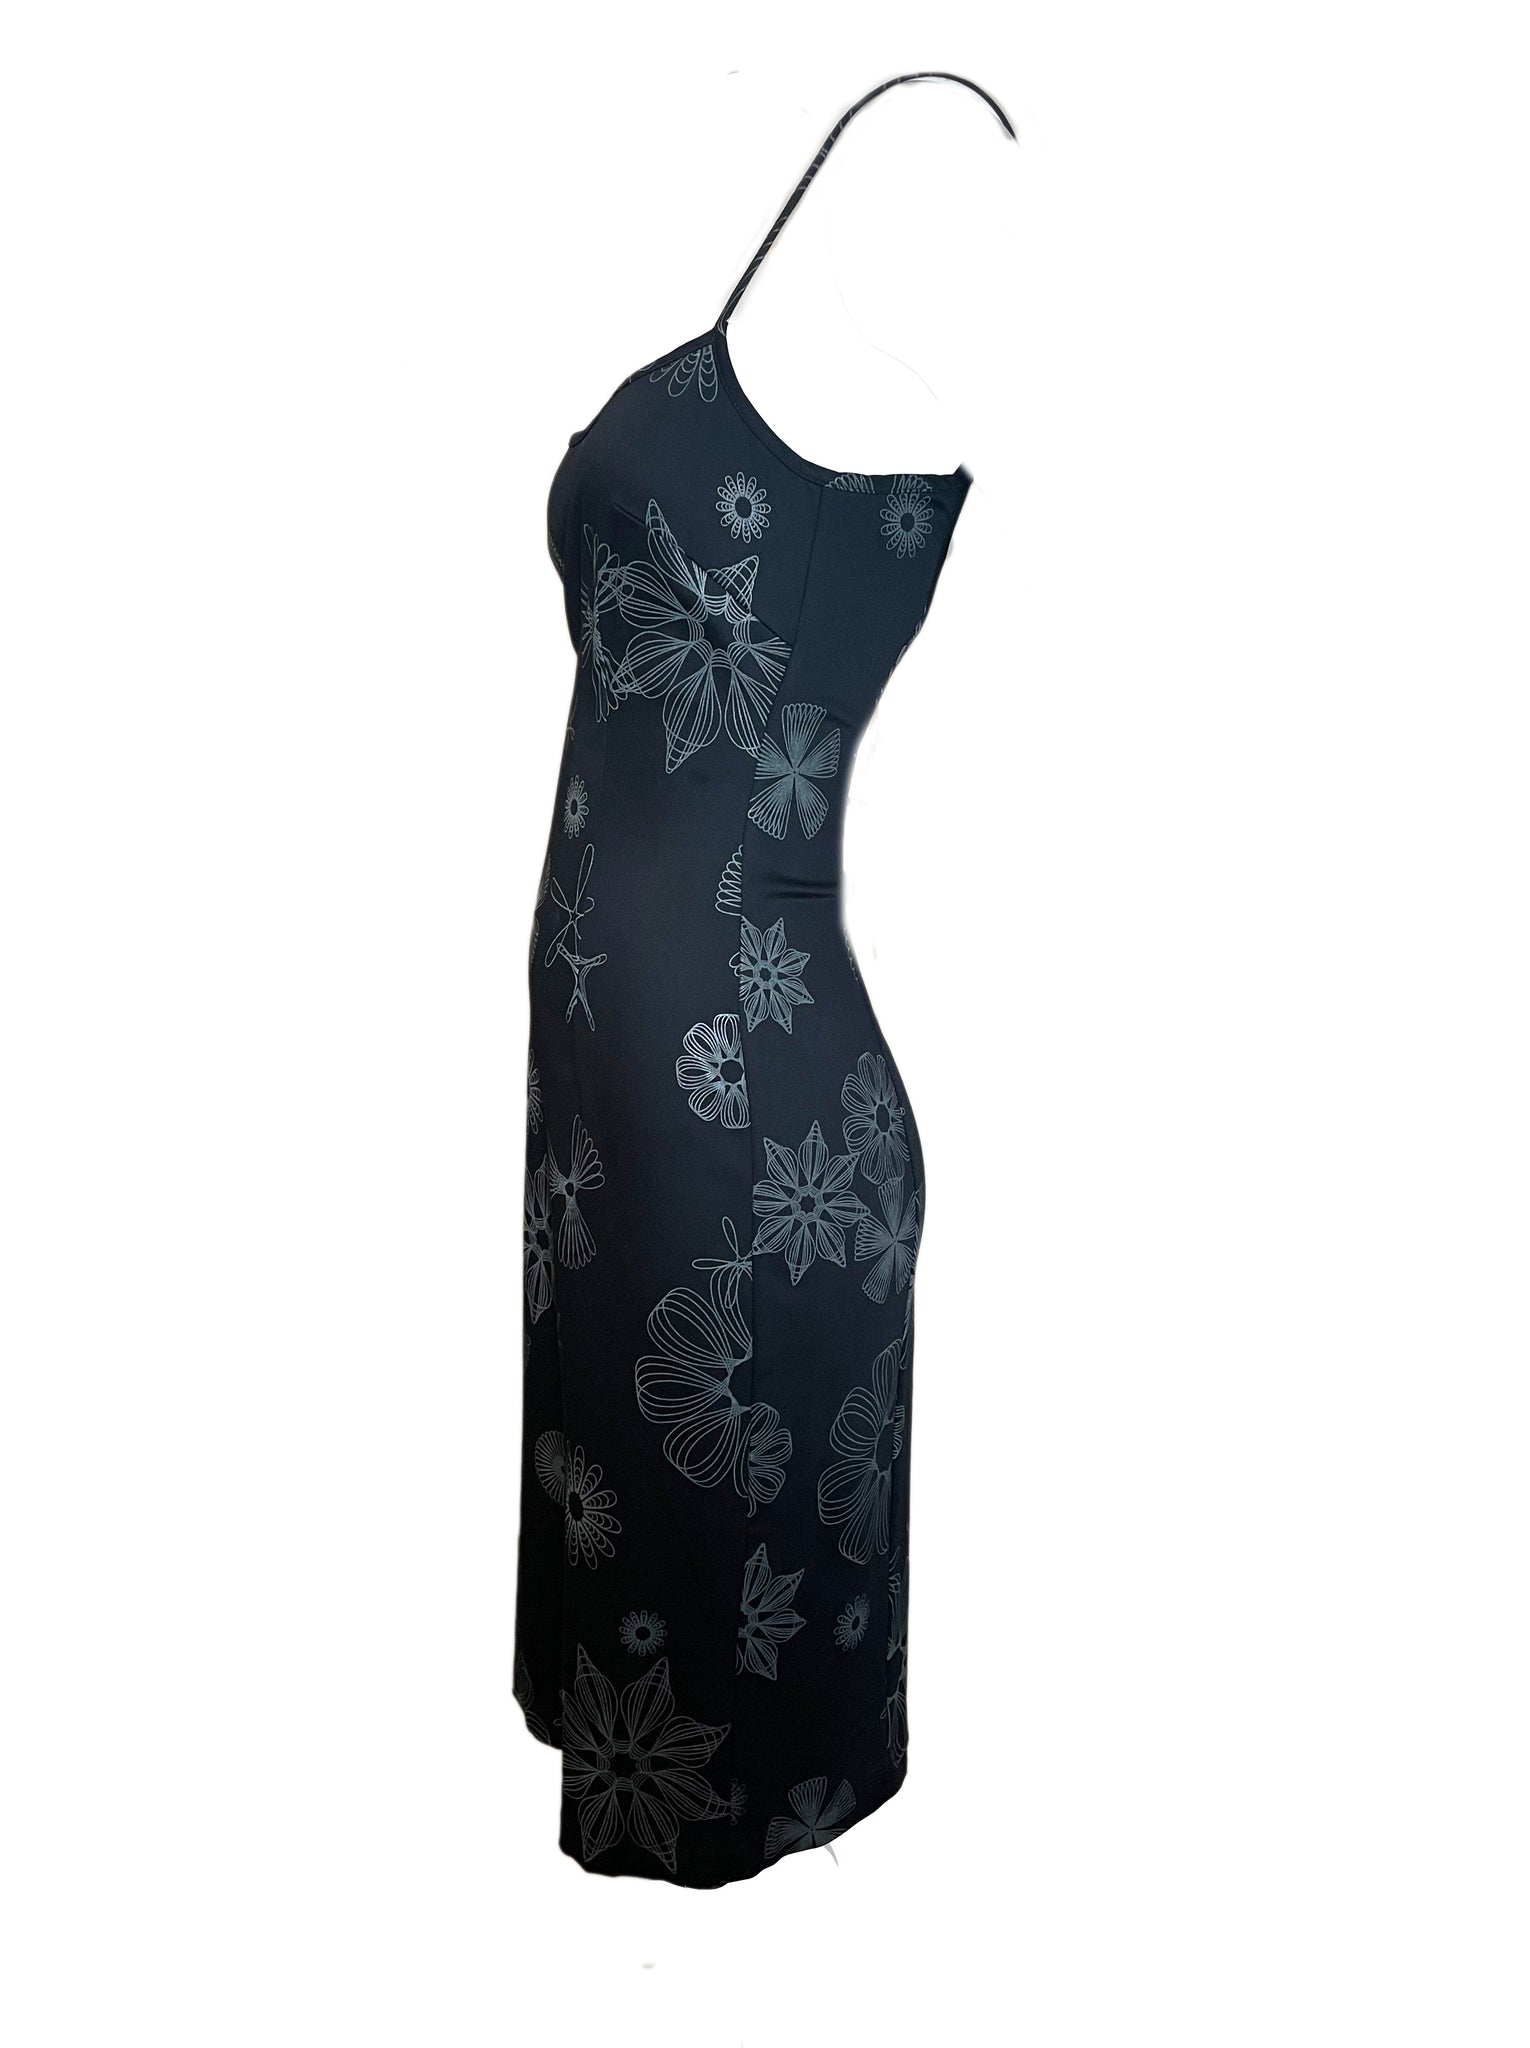 Moschino 90s Black Floral Body Con Slip DressSide 2 of 5